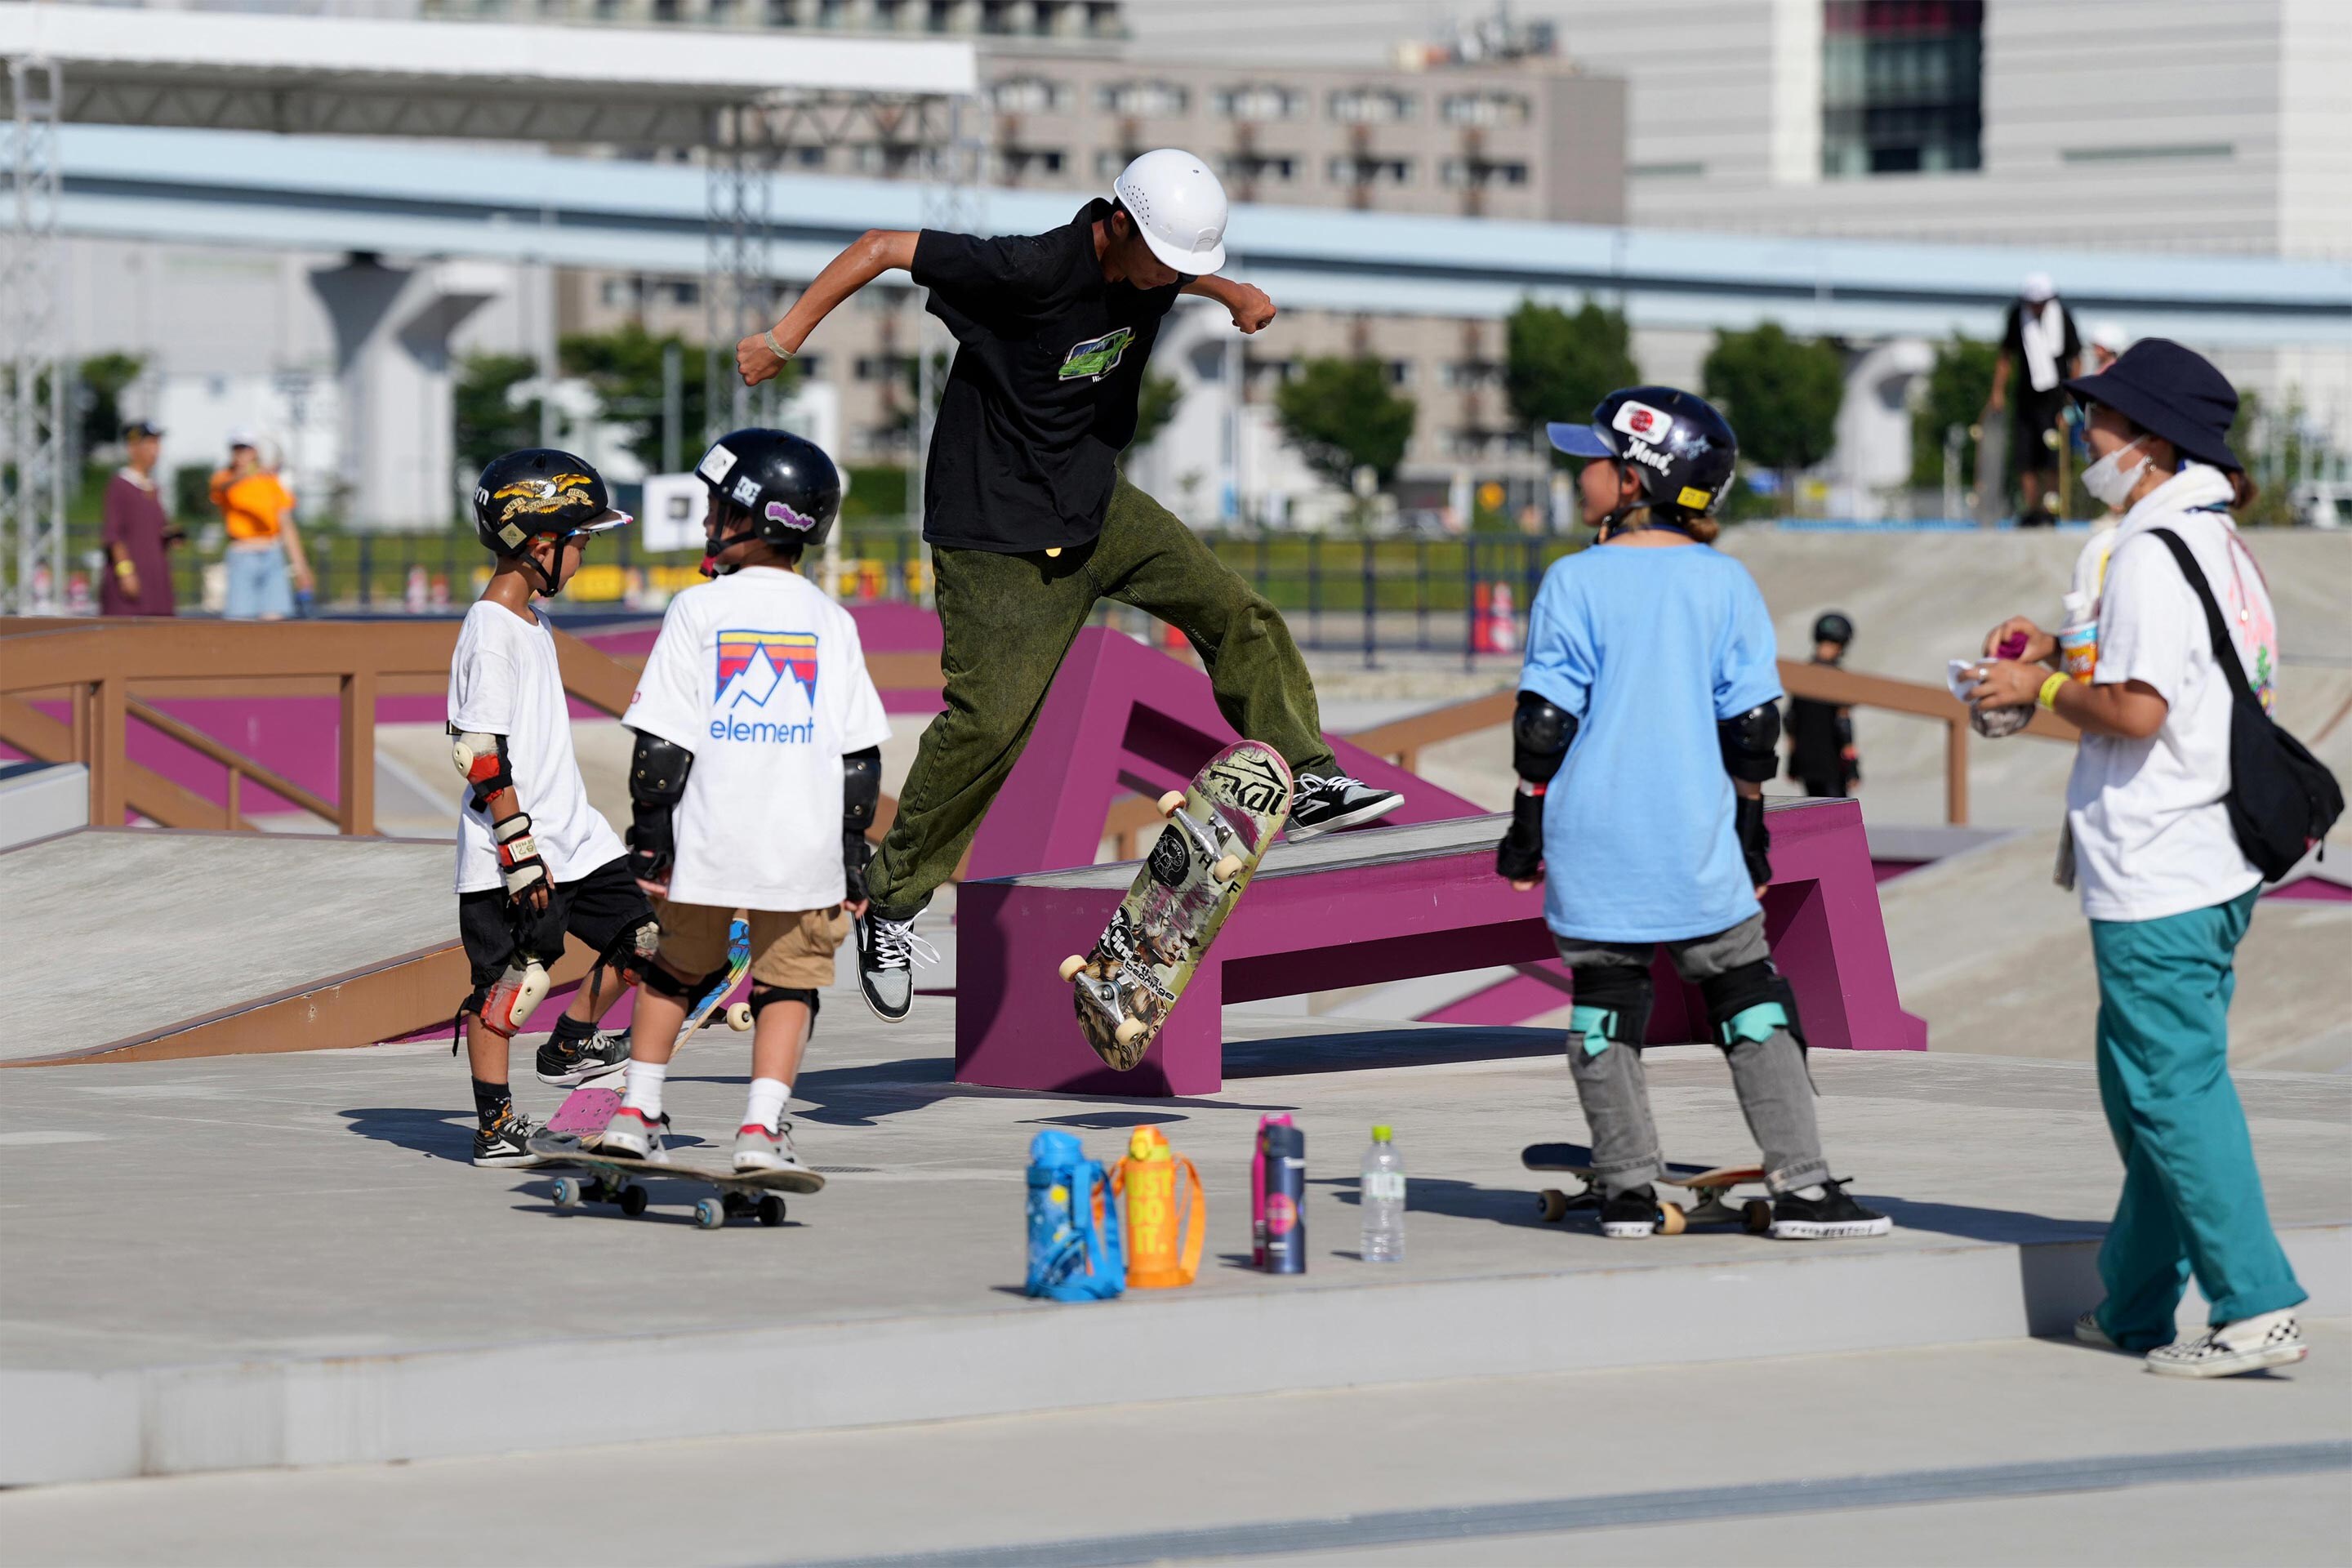 Youth skateboarding at an Urban Sports park